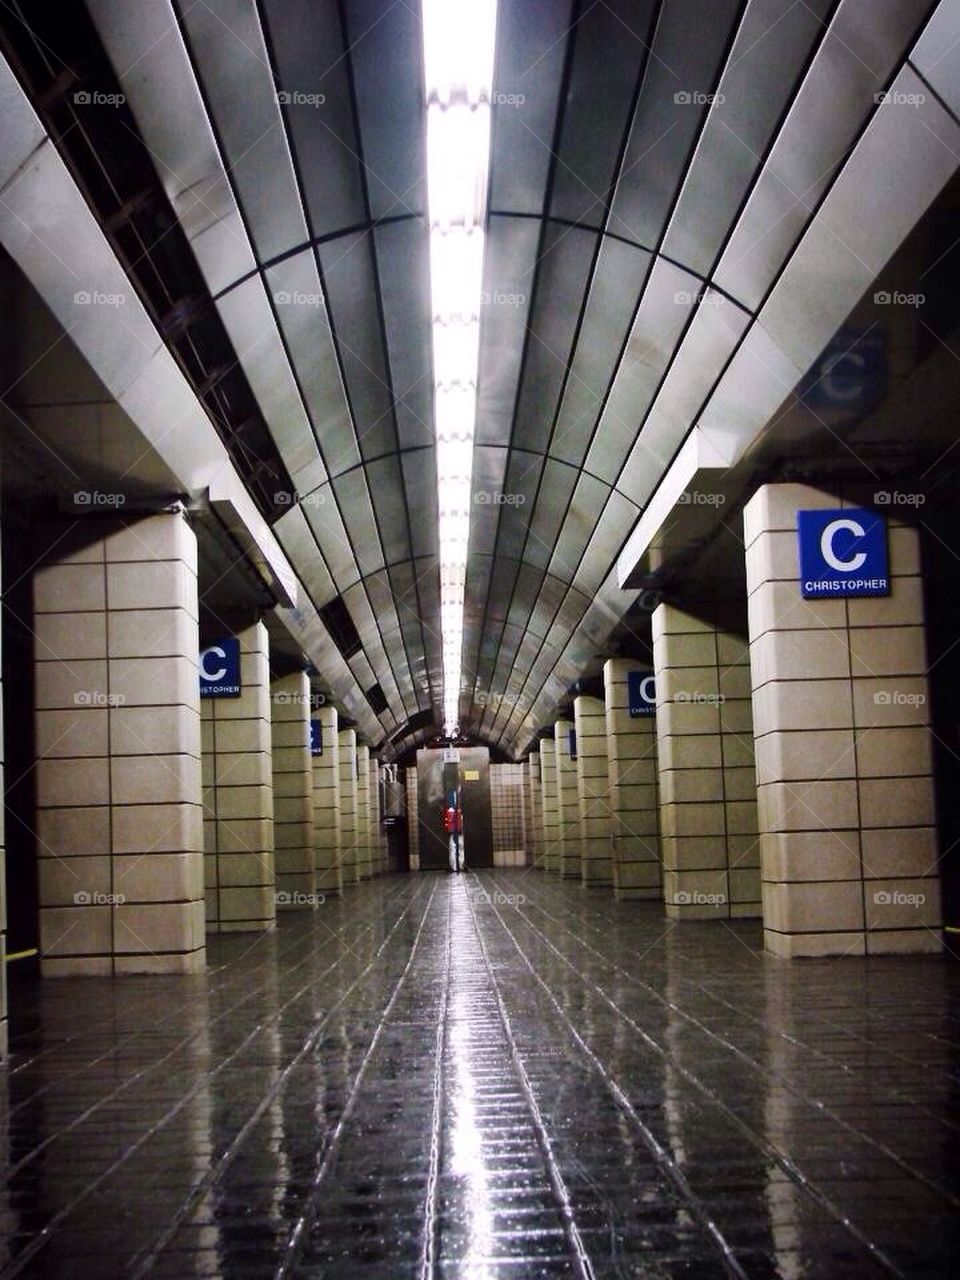 Christopher Street subway